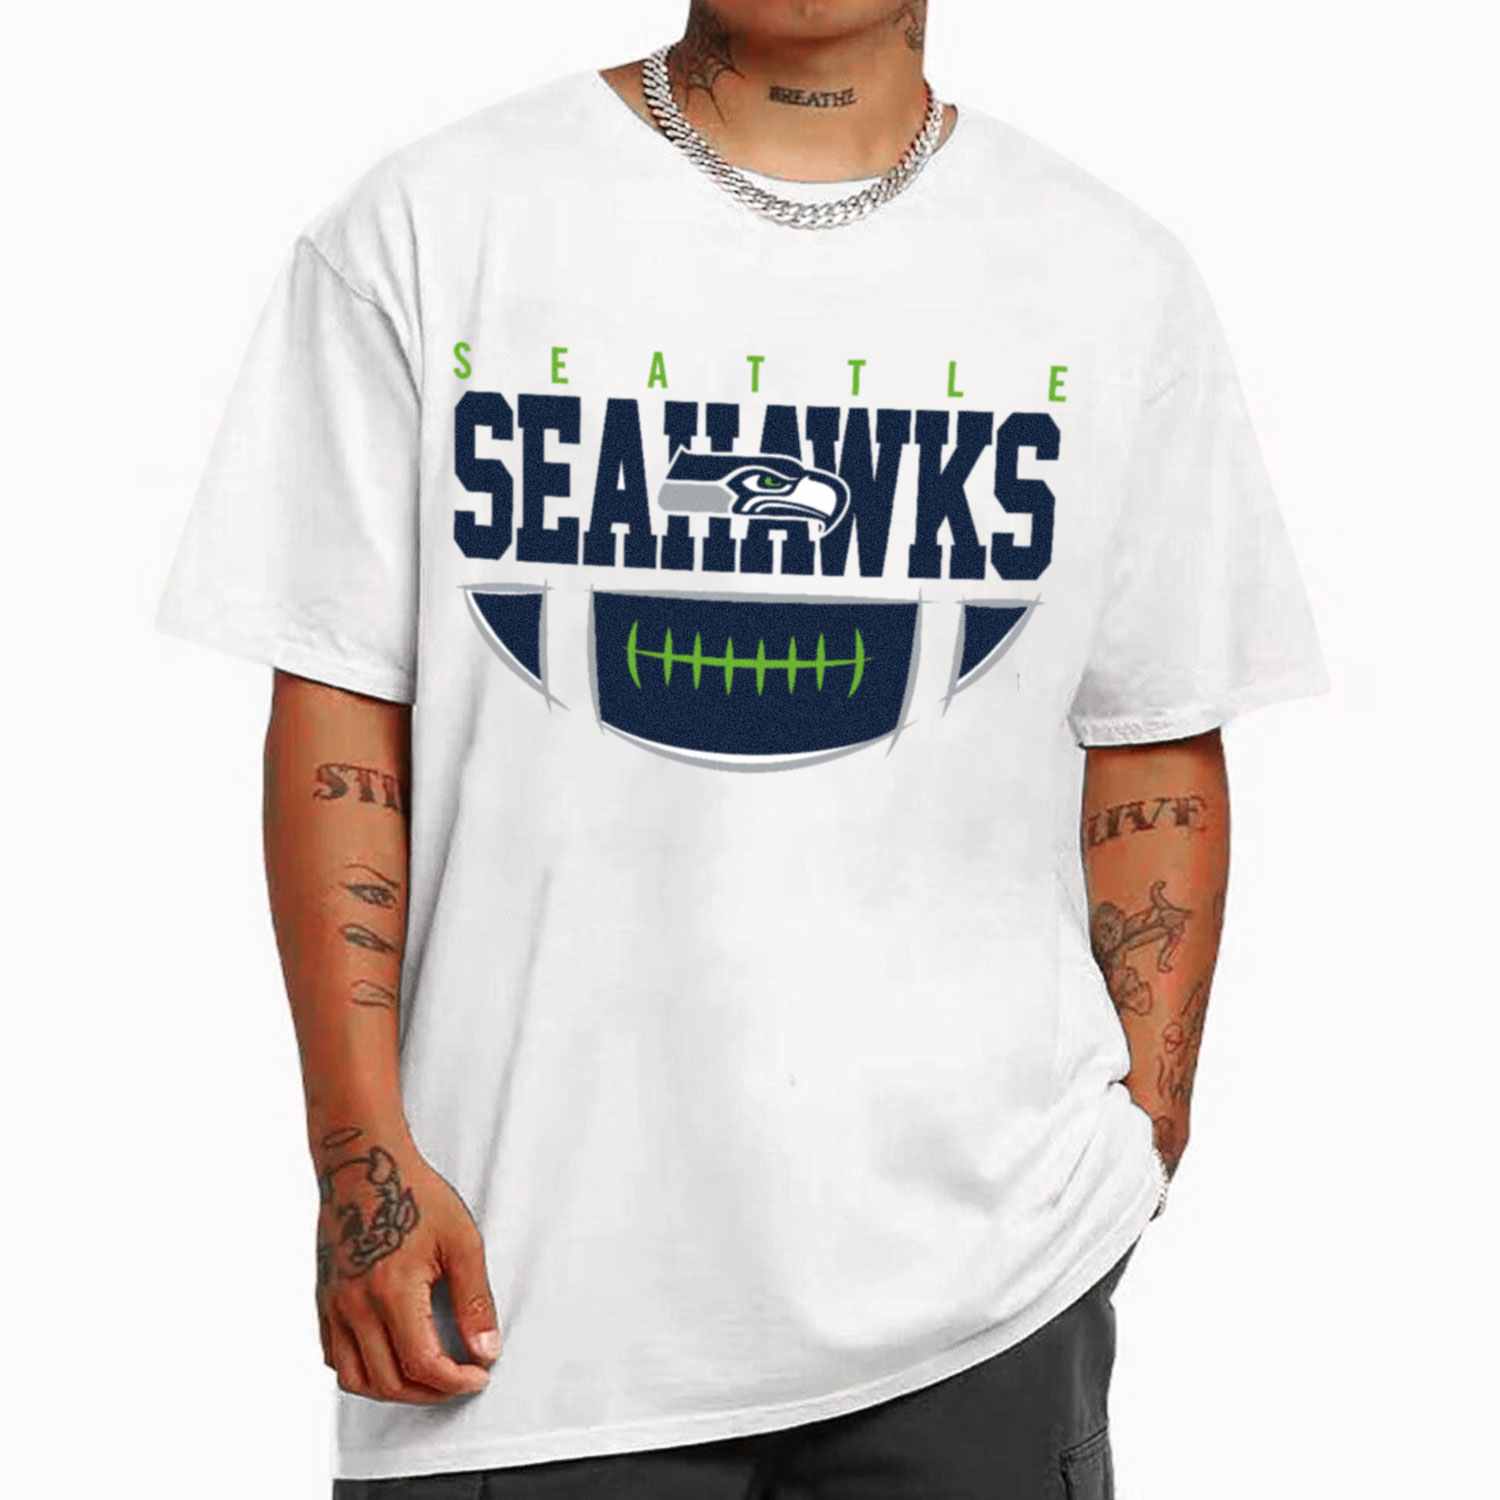 seahawks shirt men